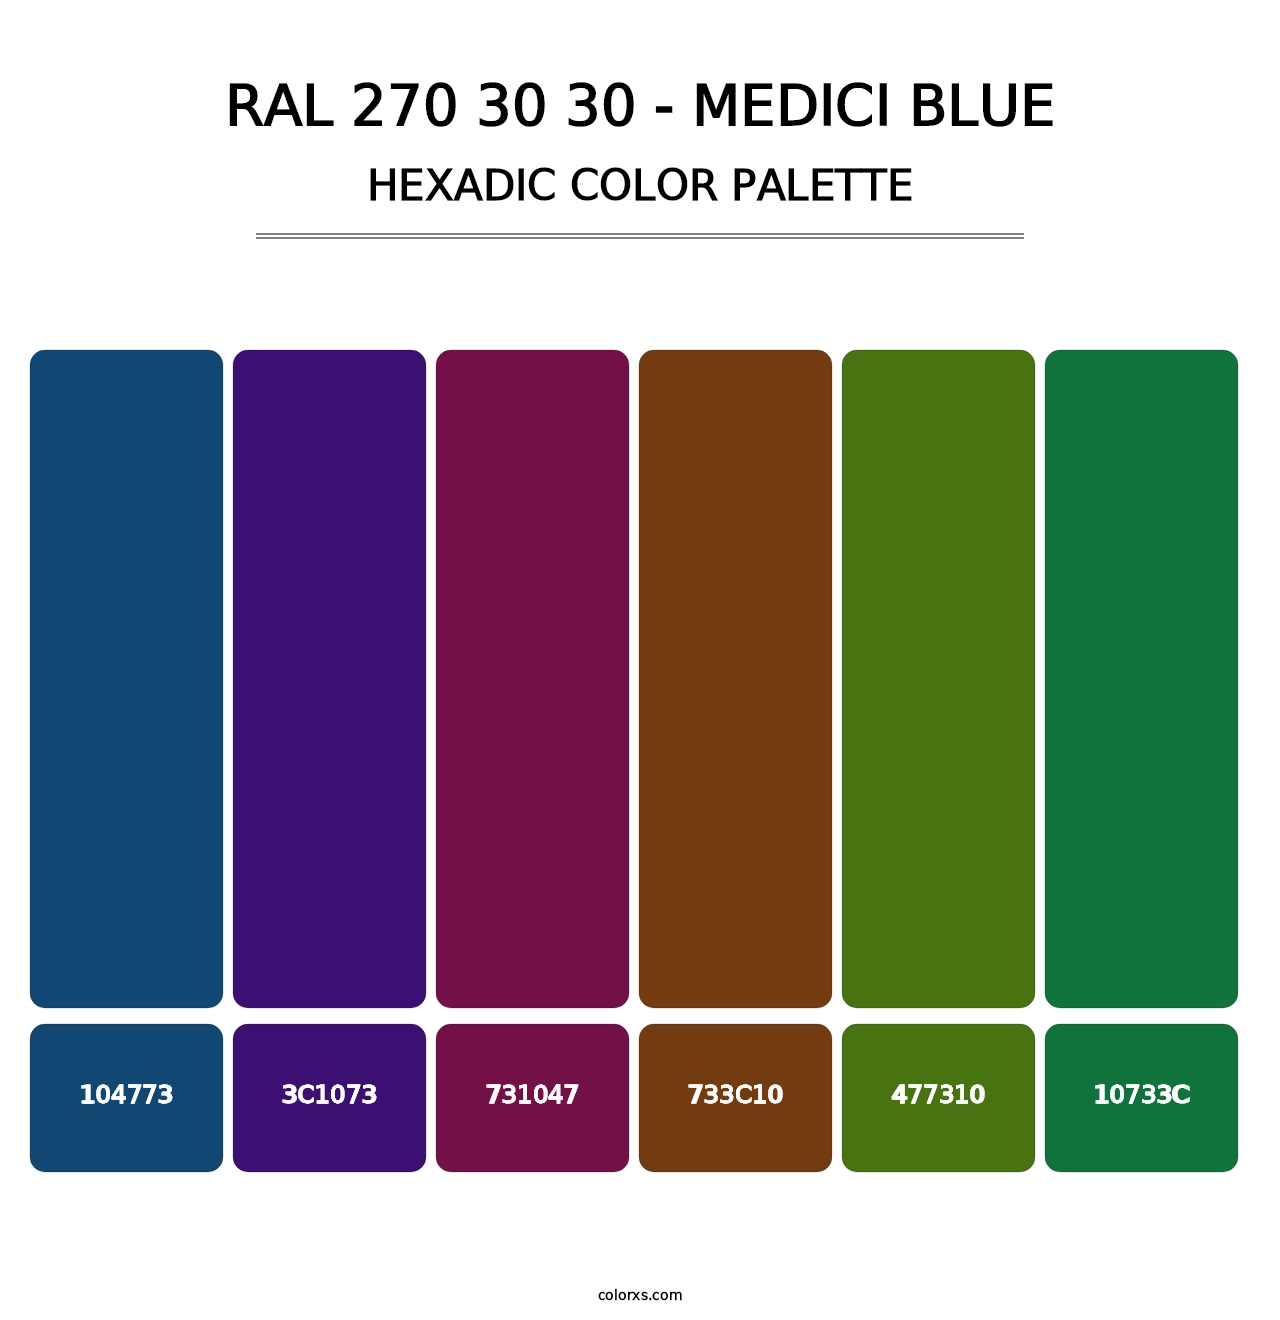 RAL 270 30 30 - Medici Blue - Hexadic Color Palette